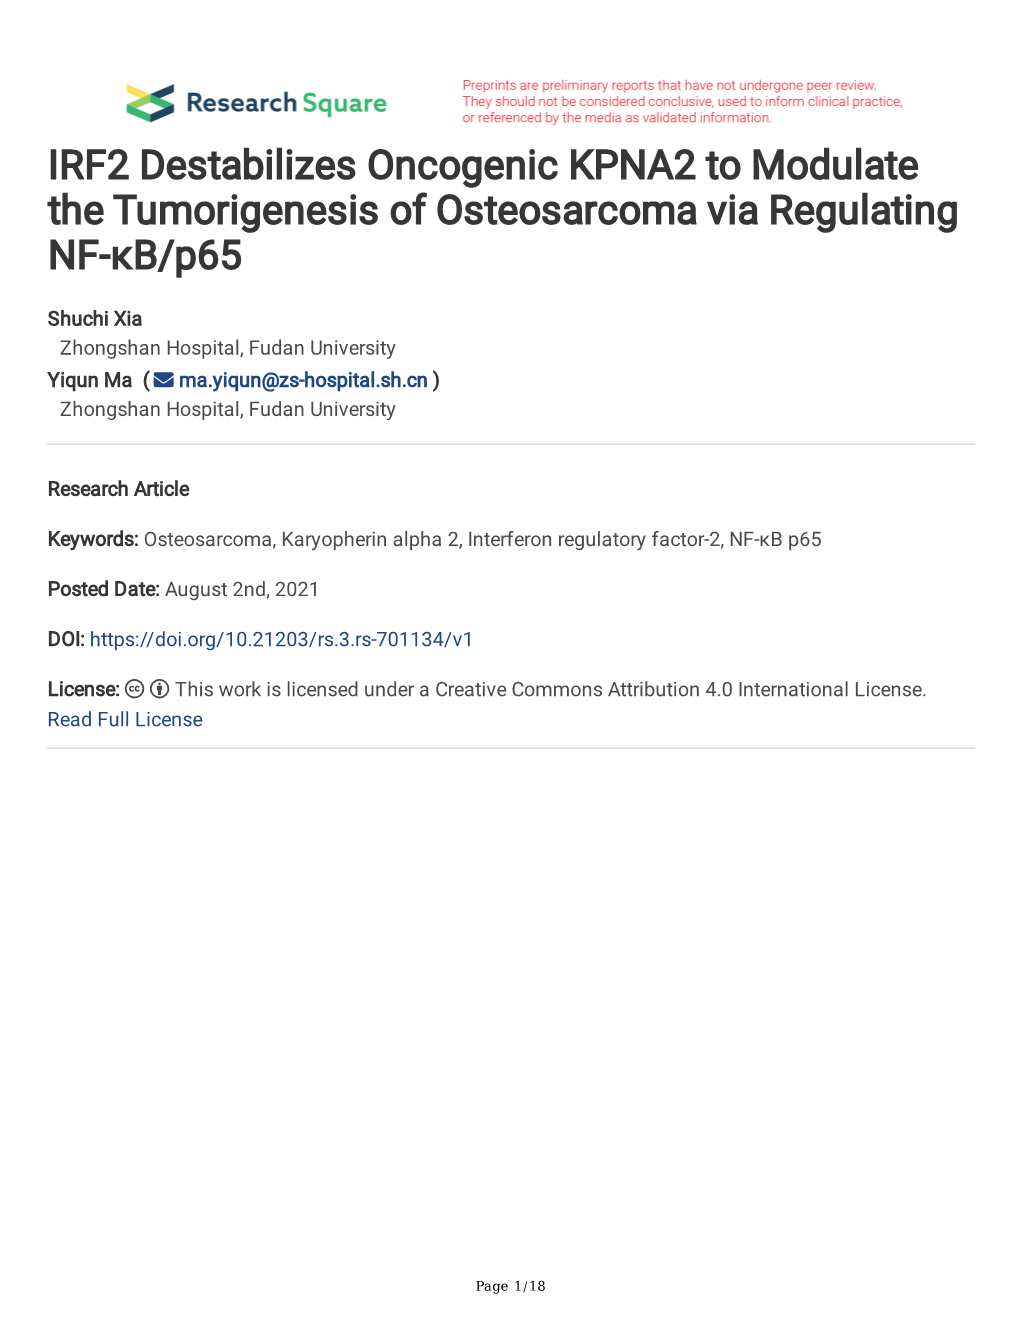 IRF2 Destabilizes Oncogenic KPNA2 to Modulate the Tumorigenesis of Osteosarcoma Via Regulating NF-Κb/P65